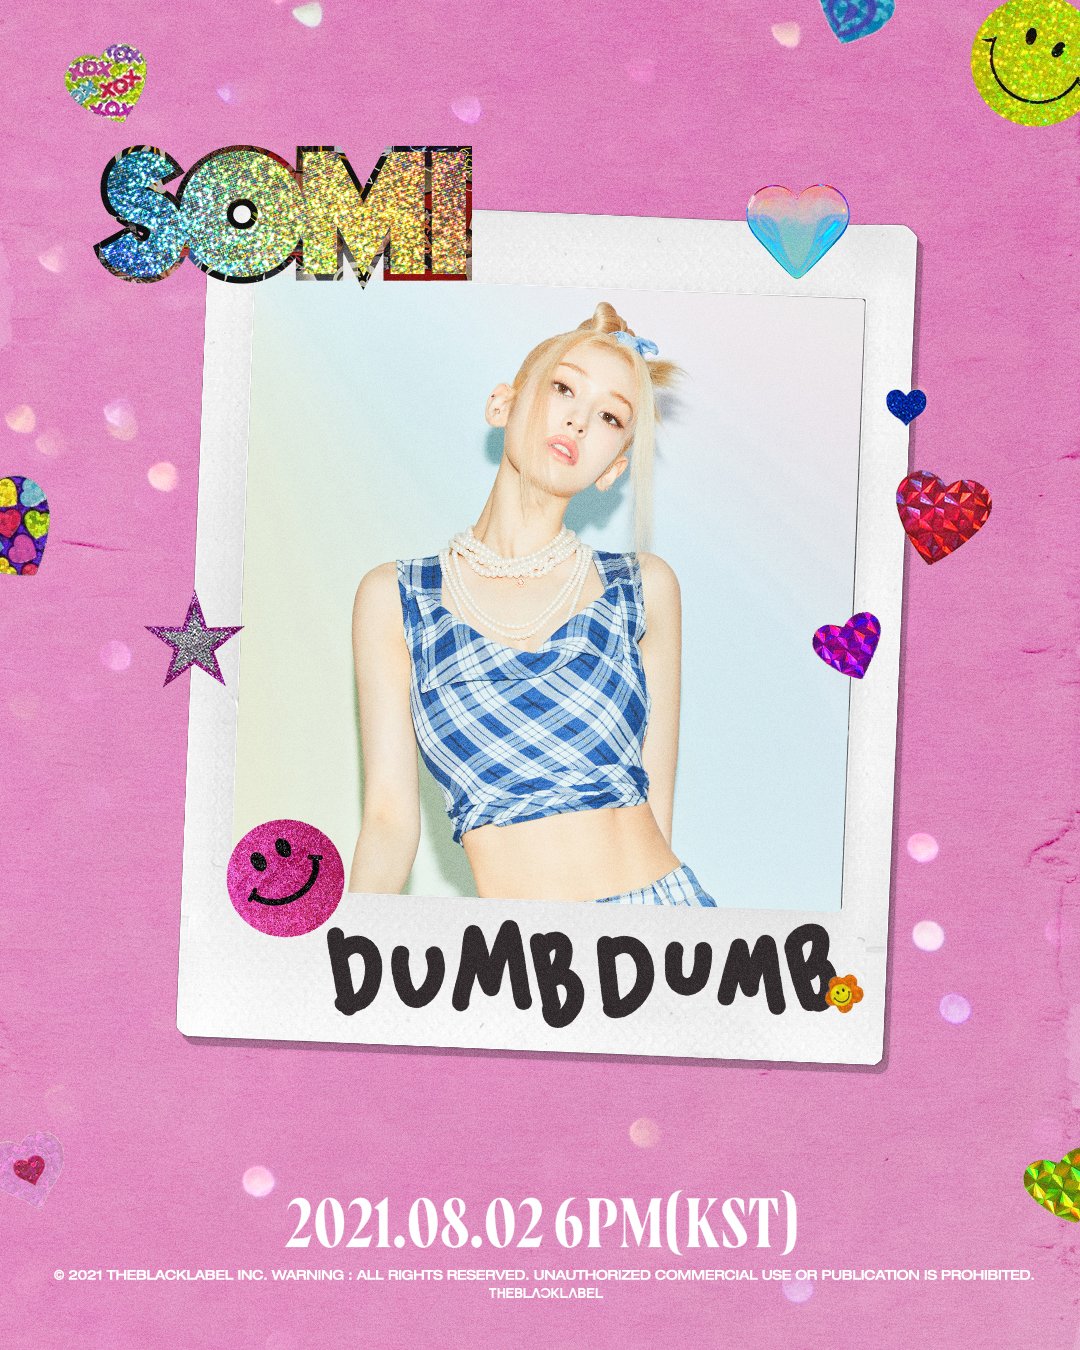 Jeon So-mi releases teaser for 'DUMB DUMB' like a teen movie